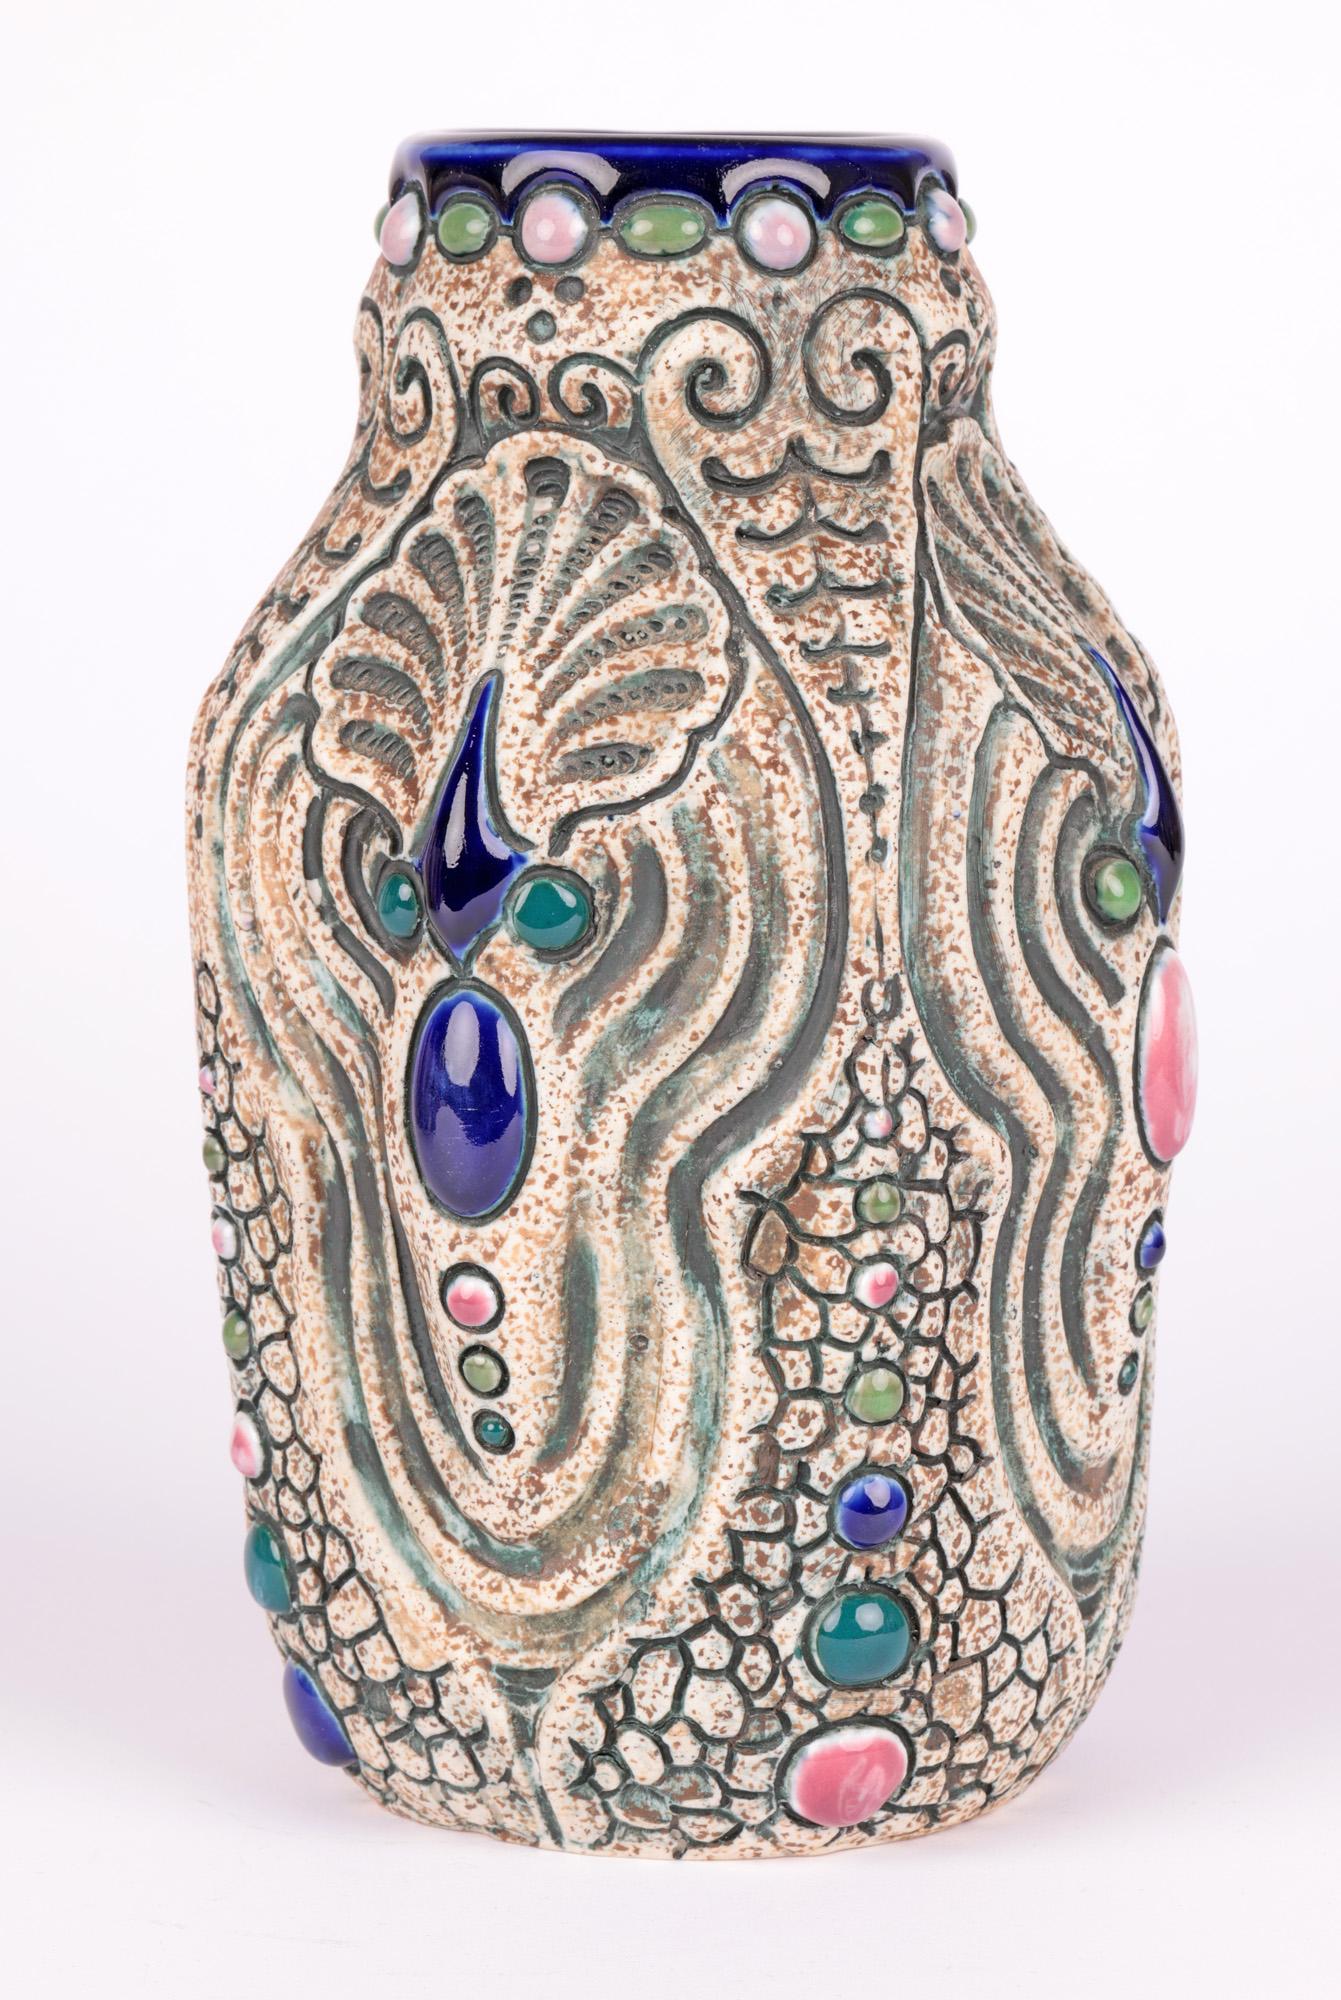 Amphora Czech Art Deco Jewelled Art Pottery Vase In Good Condition For Sale In Bishop's Stortford, Hertfordshire